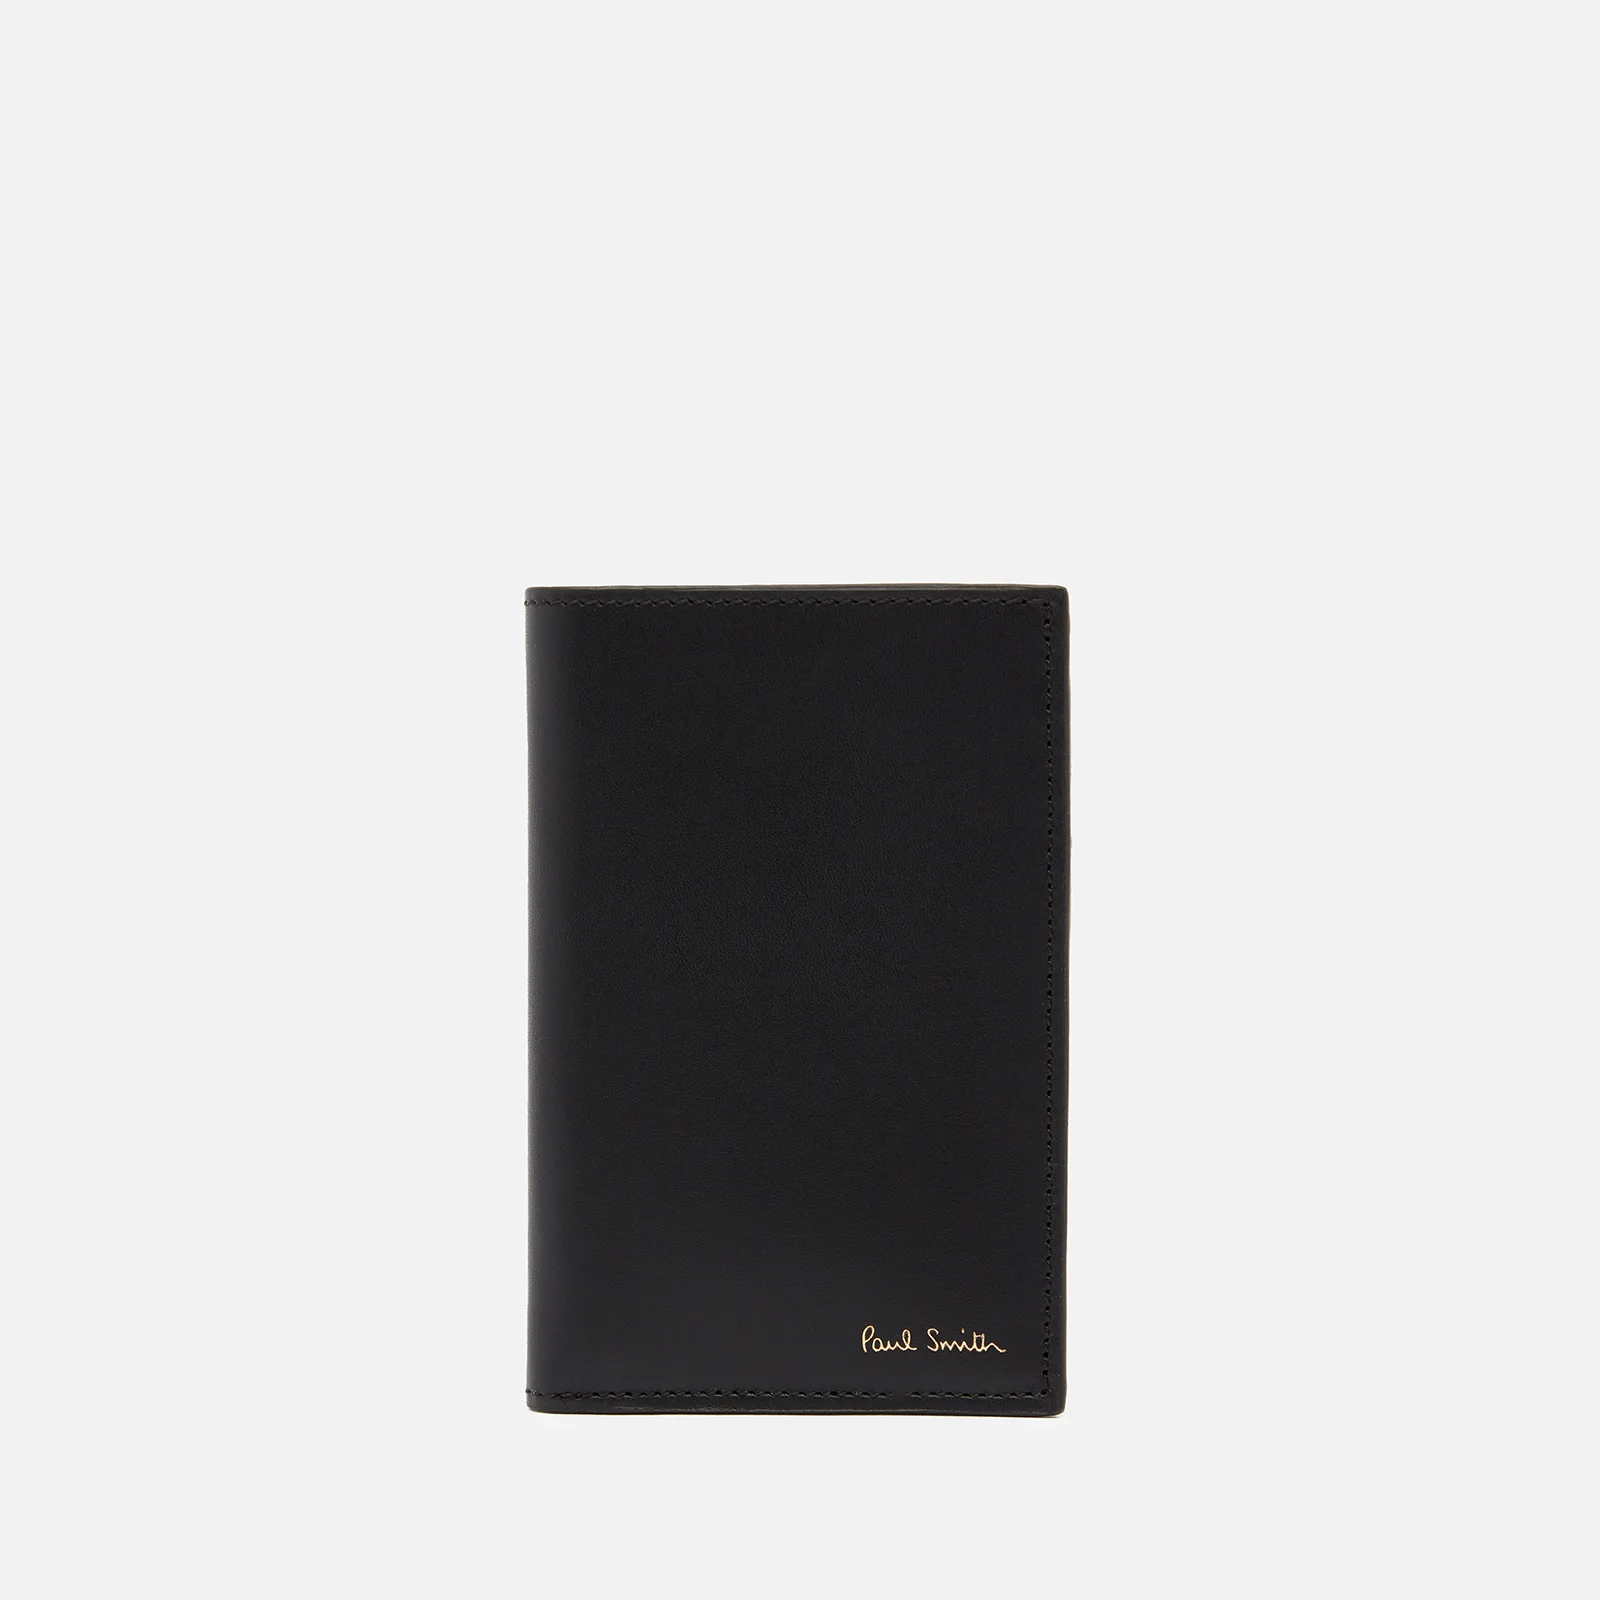 PS Paul Smith Men's Leather Internal Stripe Credit Card Wallet - Black Image 1